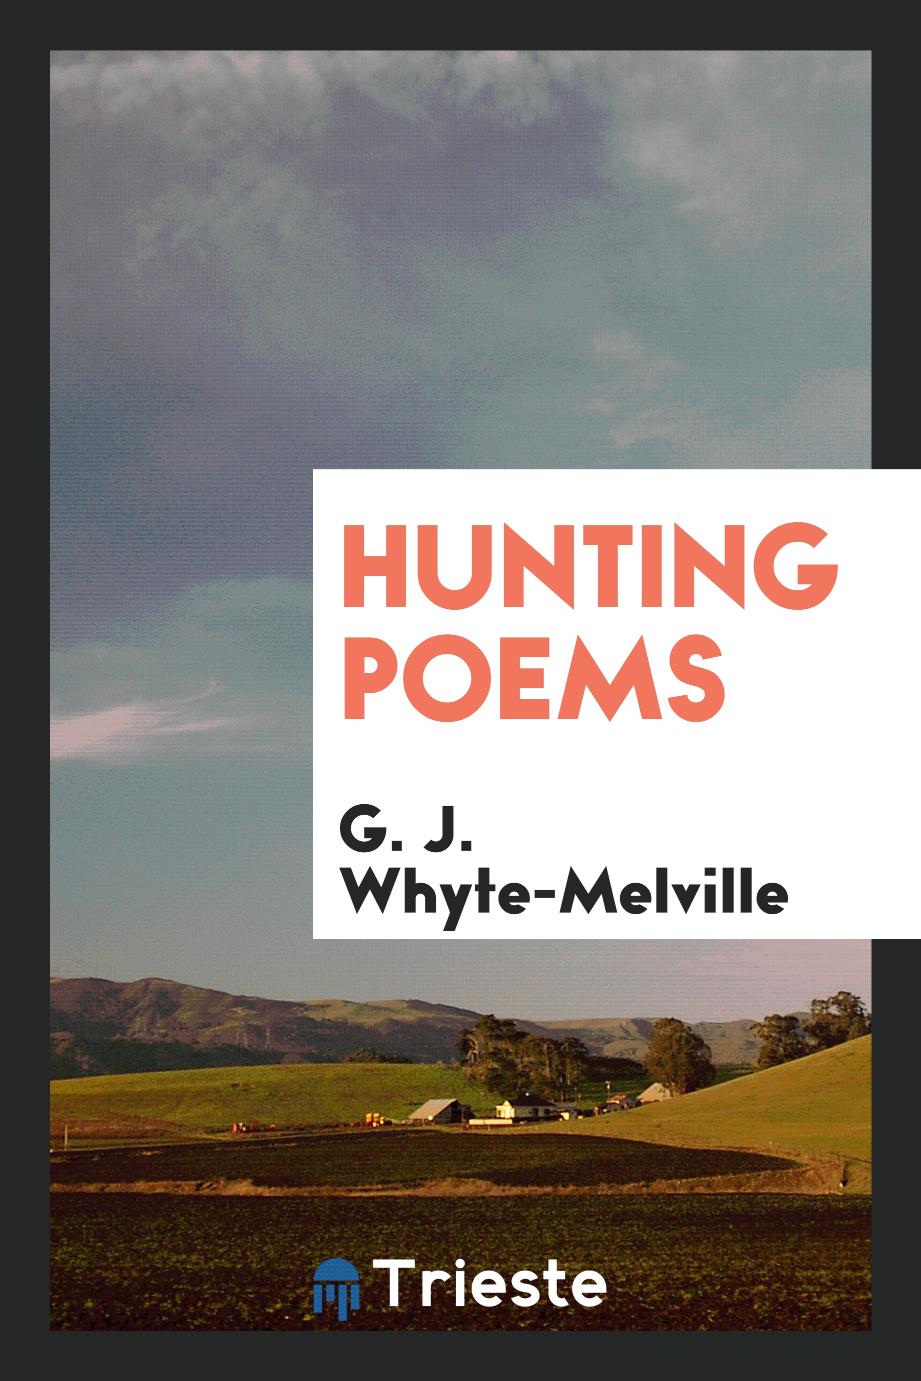 G. J. Whyte-Melville - Hunting poems